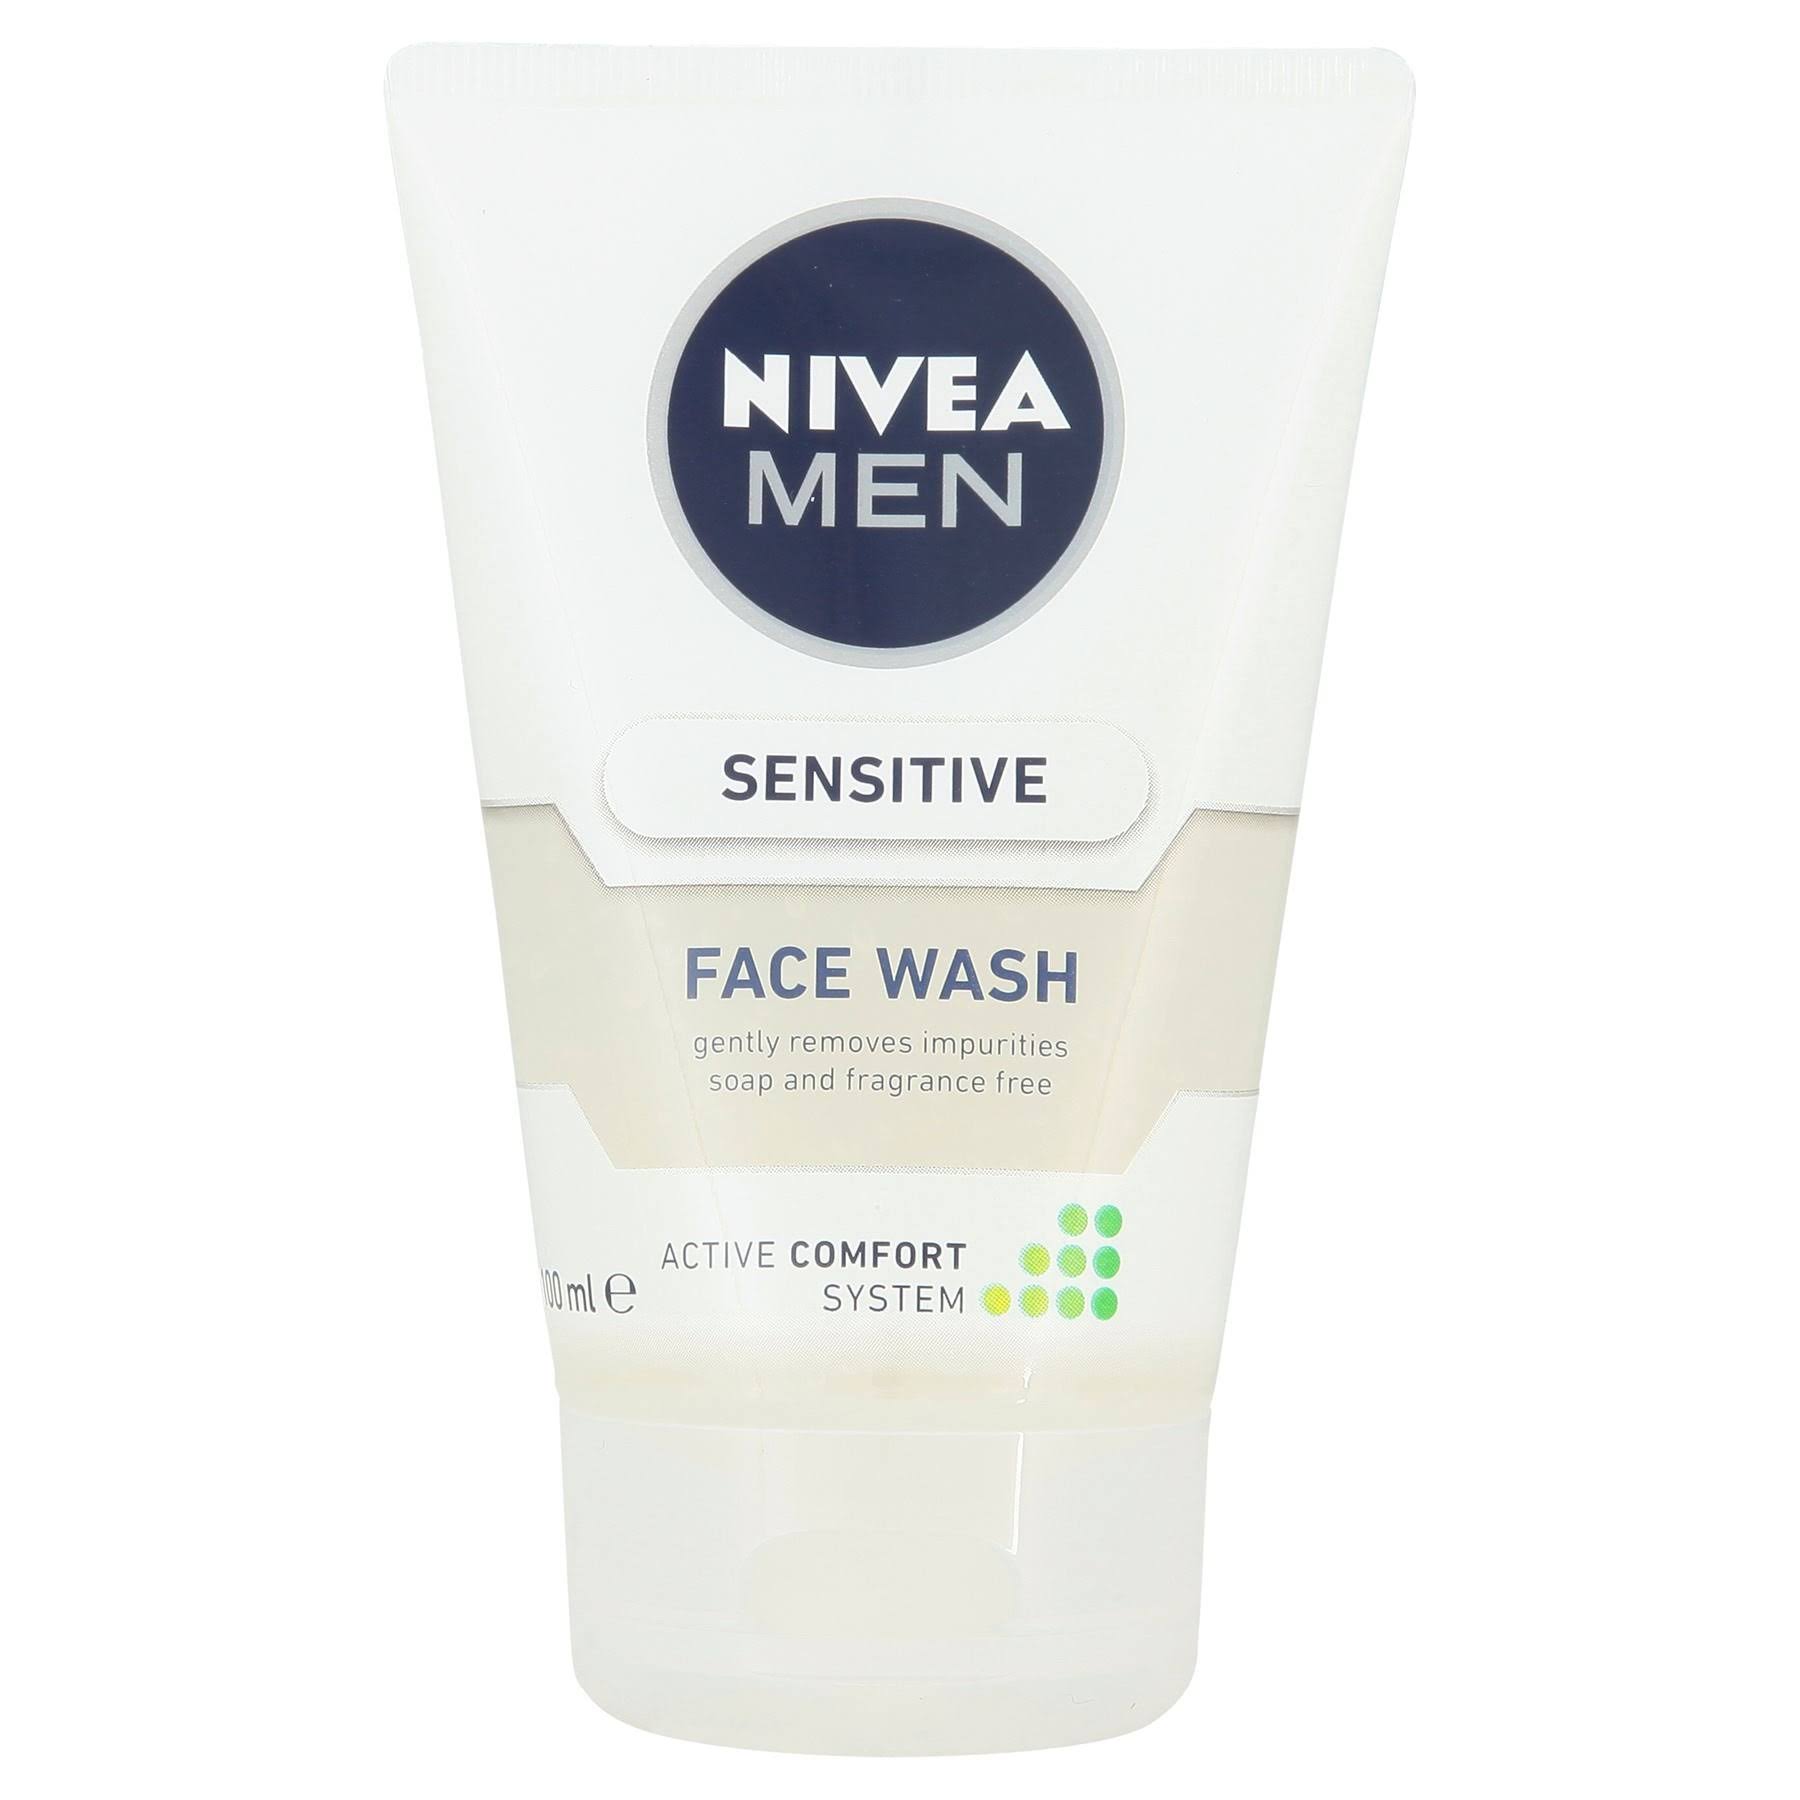 Nivea Men's Sensitive Face Wash - 100ml